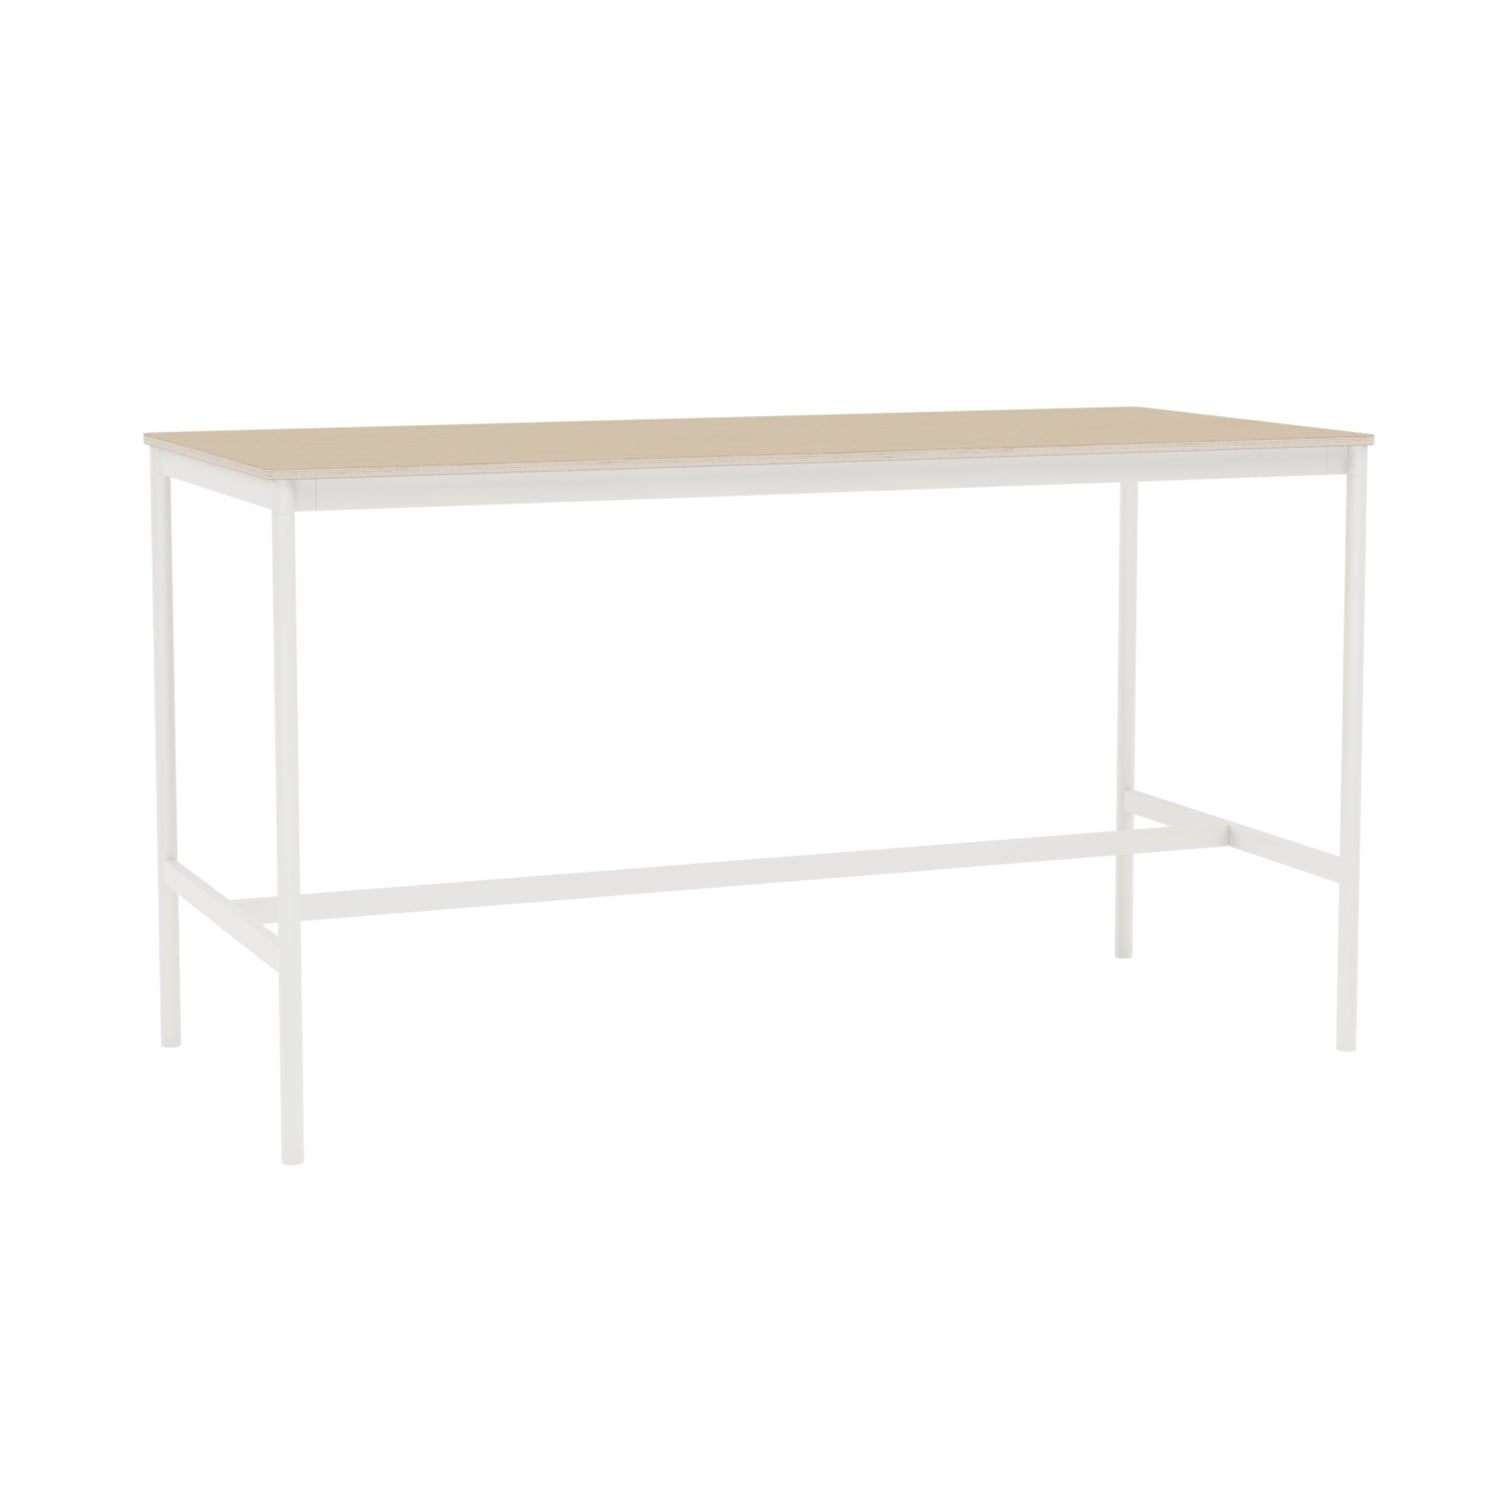 Base High Table: Oak Veneer + Plywood Edge + White